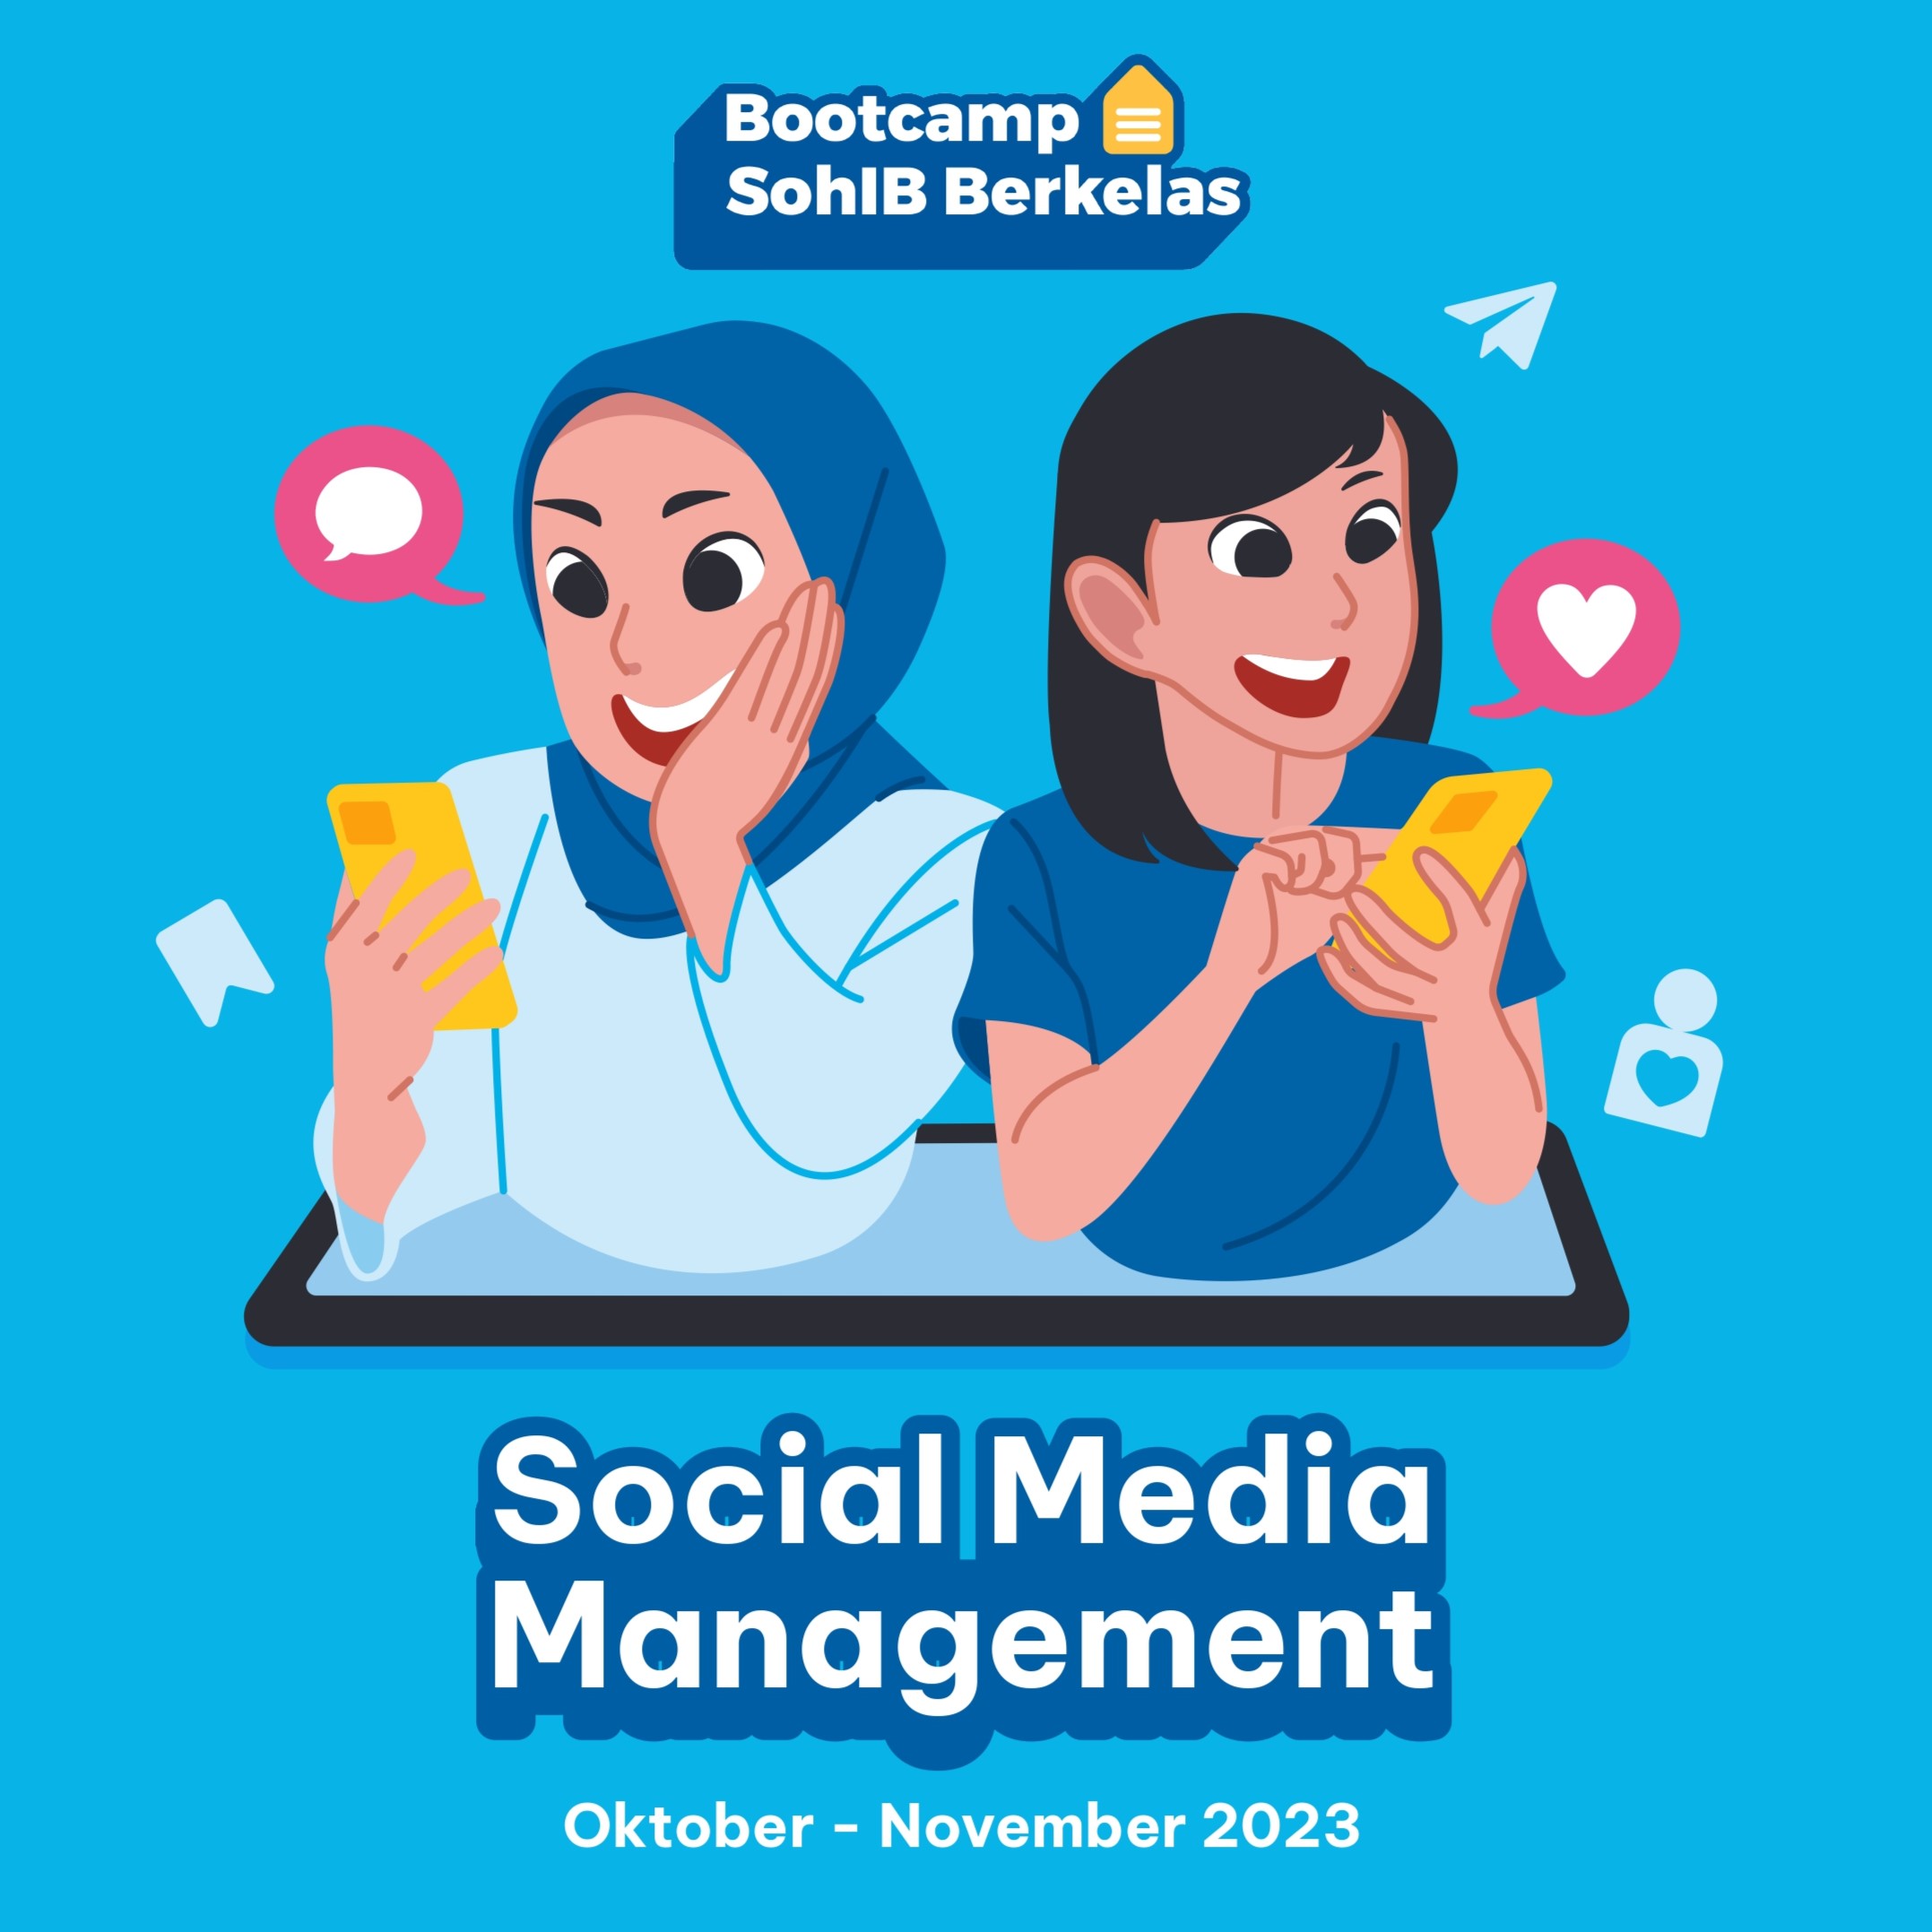 Ebook Bootcamp SohIB Berkelas - Social Media Management 2023